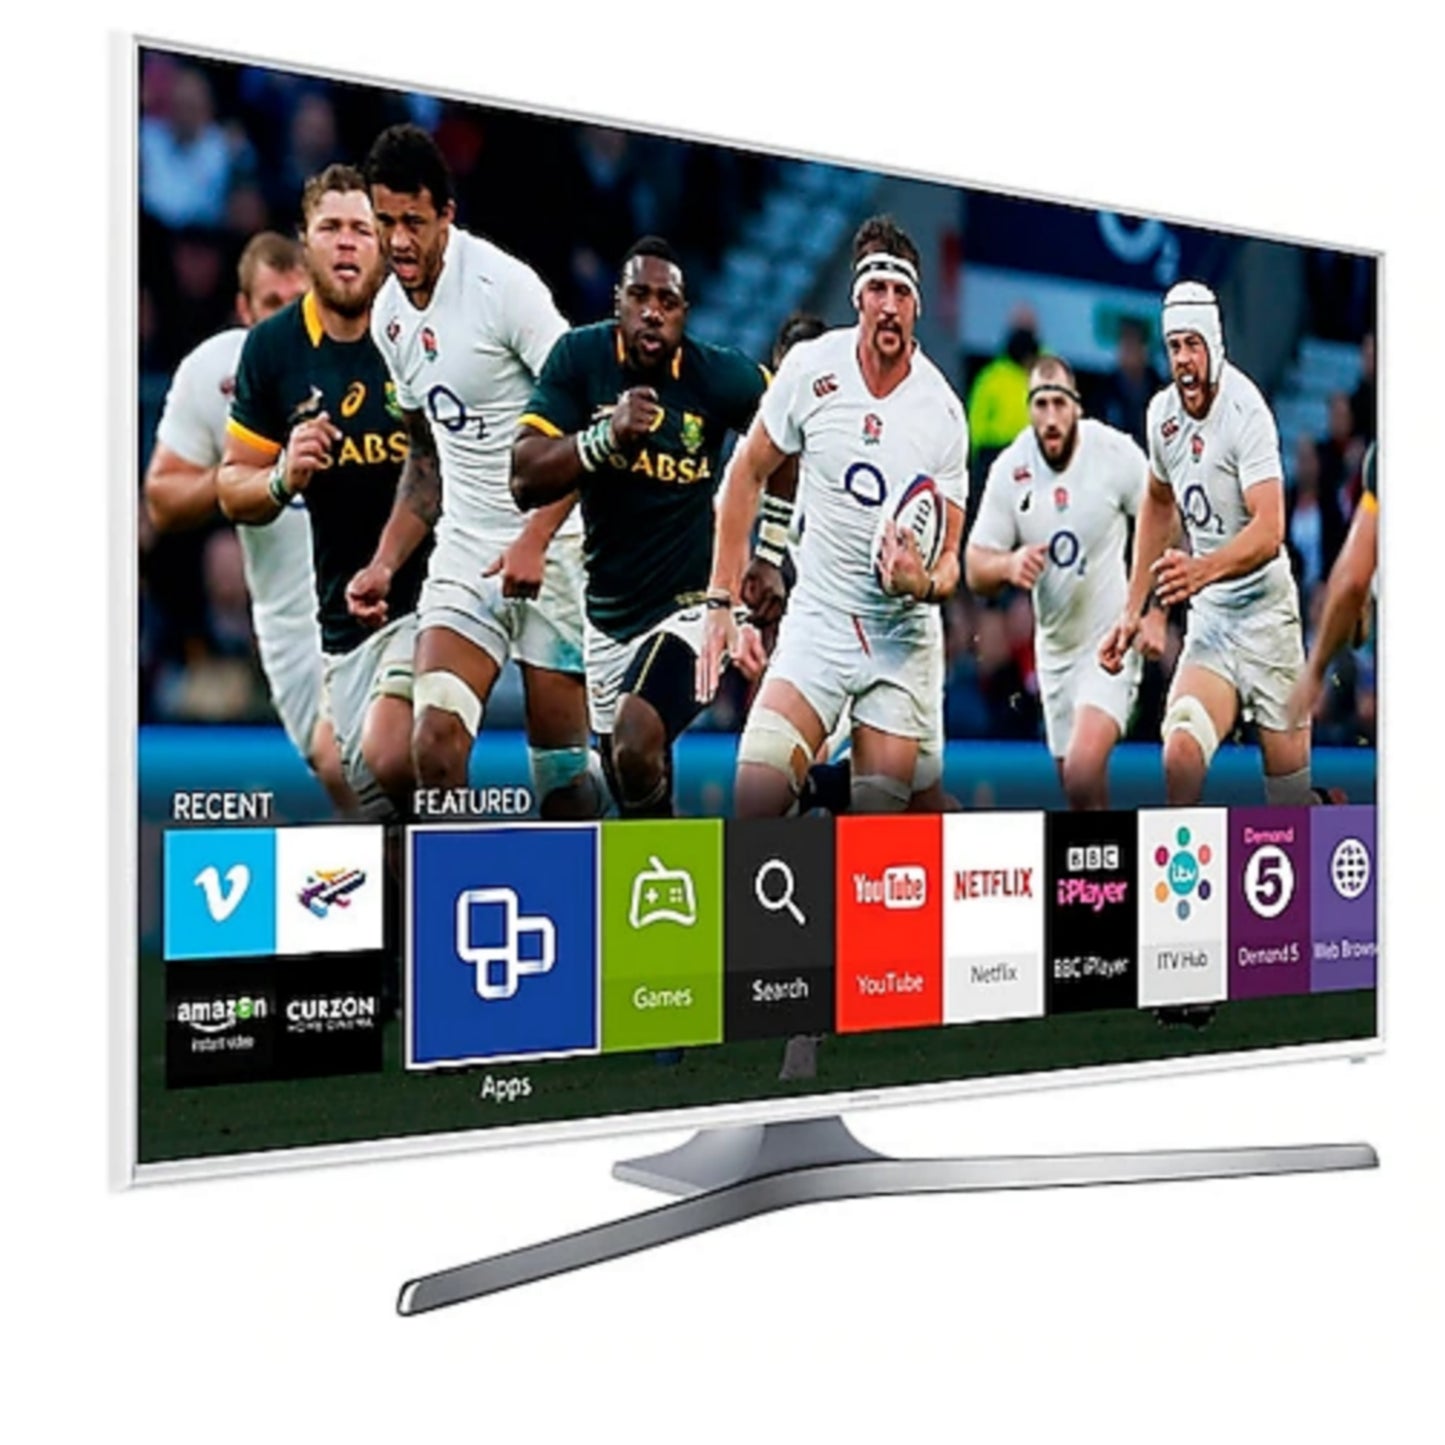 SAMSUNG 50 Inch UE50J5500 Series 5 Built-in WiFi Smart Full HD LED TV - UK Used